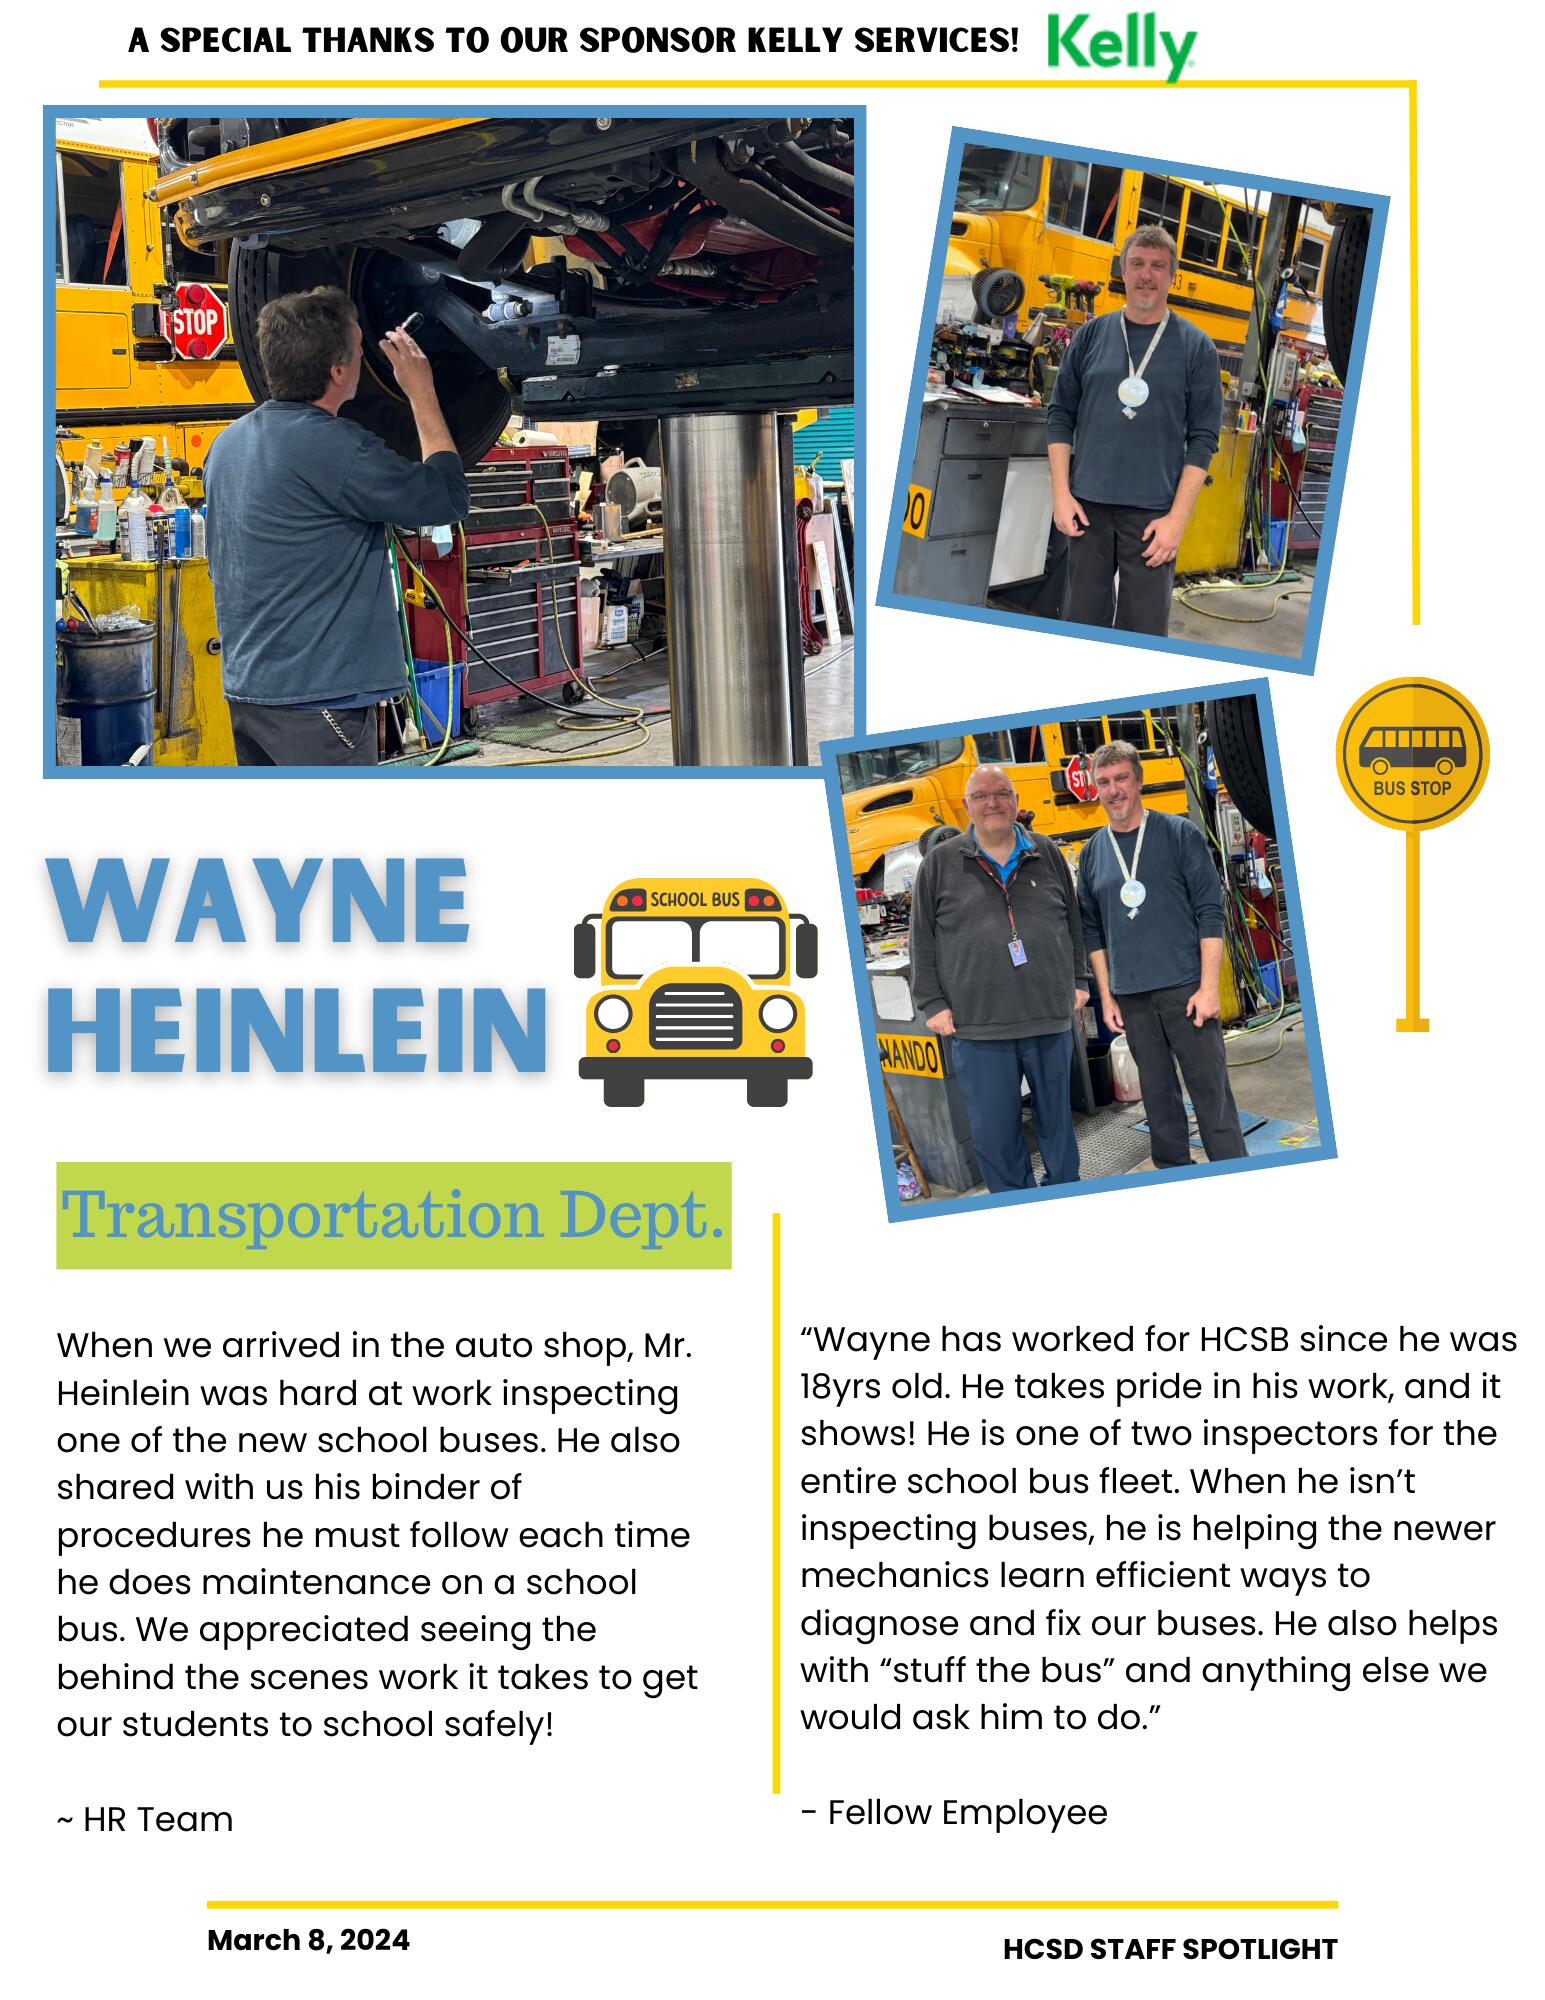 Staff Spotlight on Wayne Heinlien